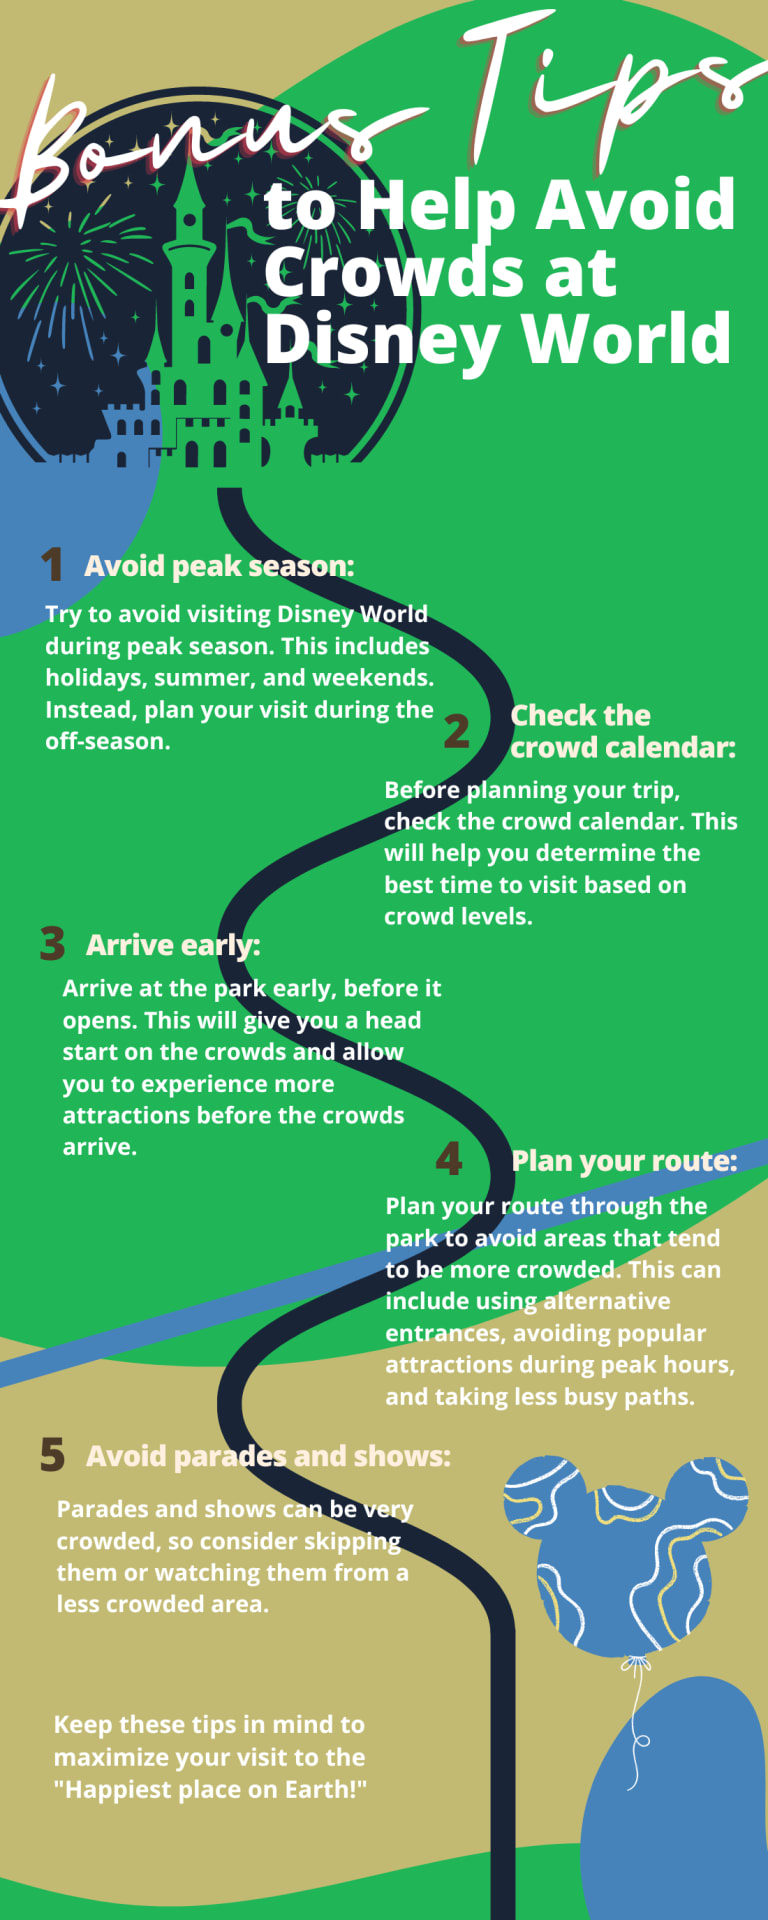 bonus tips to help avoid crowds at Disney World